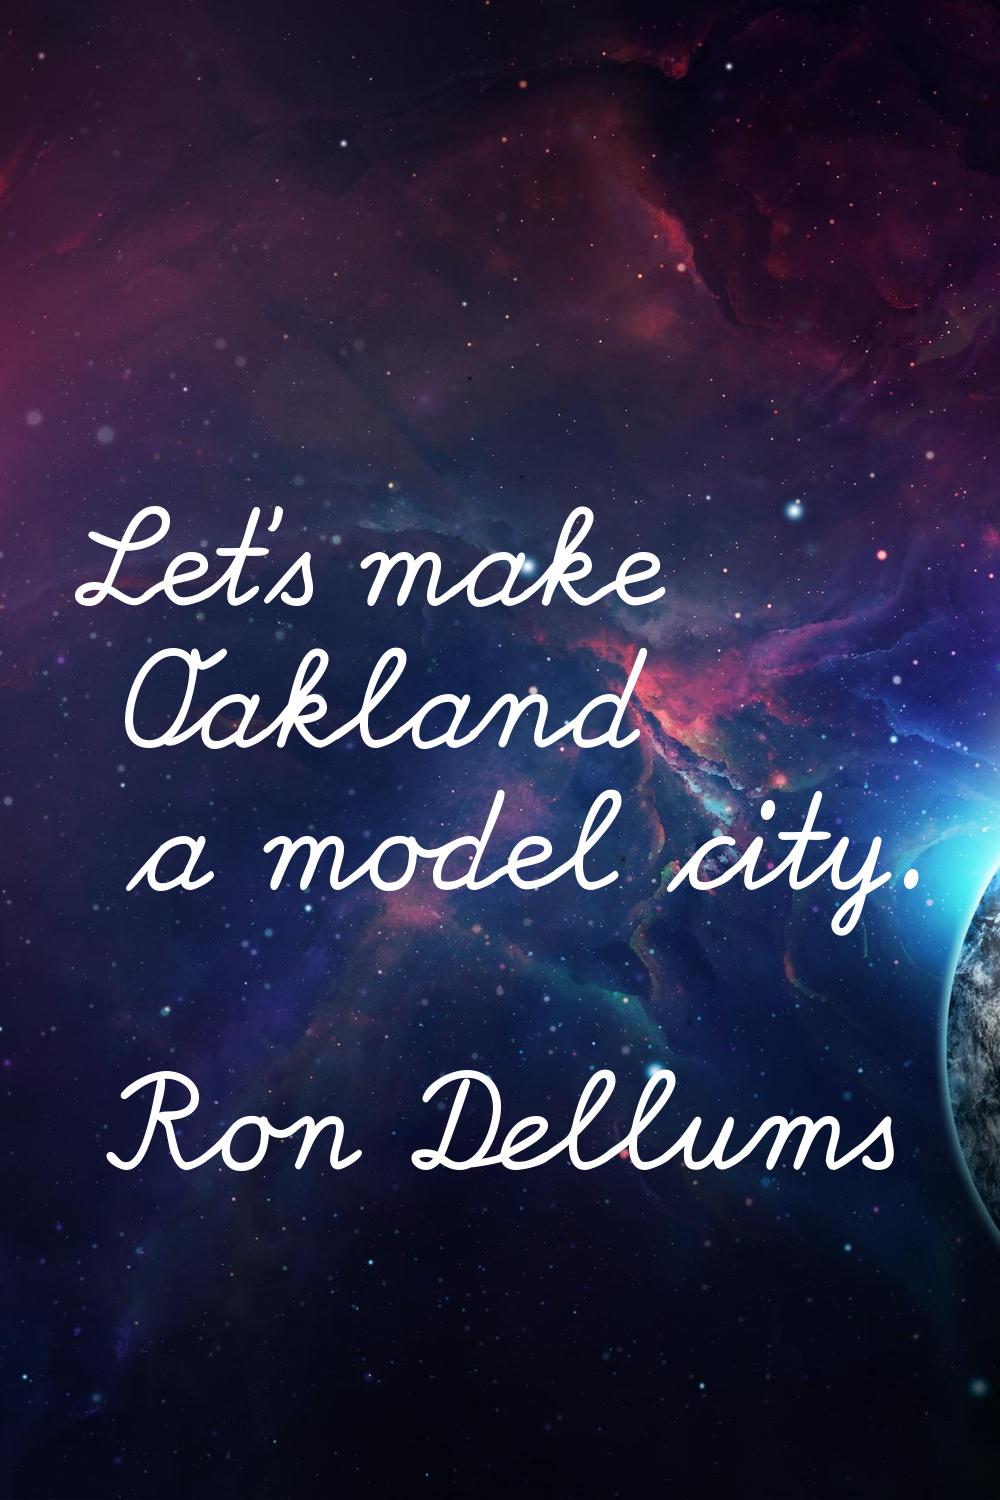 Let's make Oakland a model city.